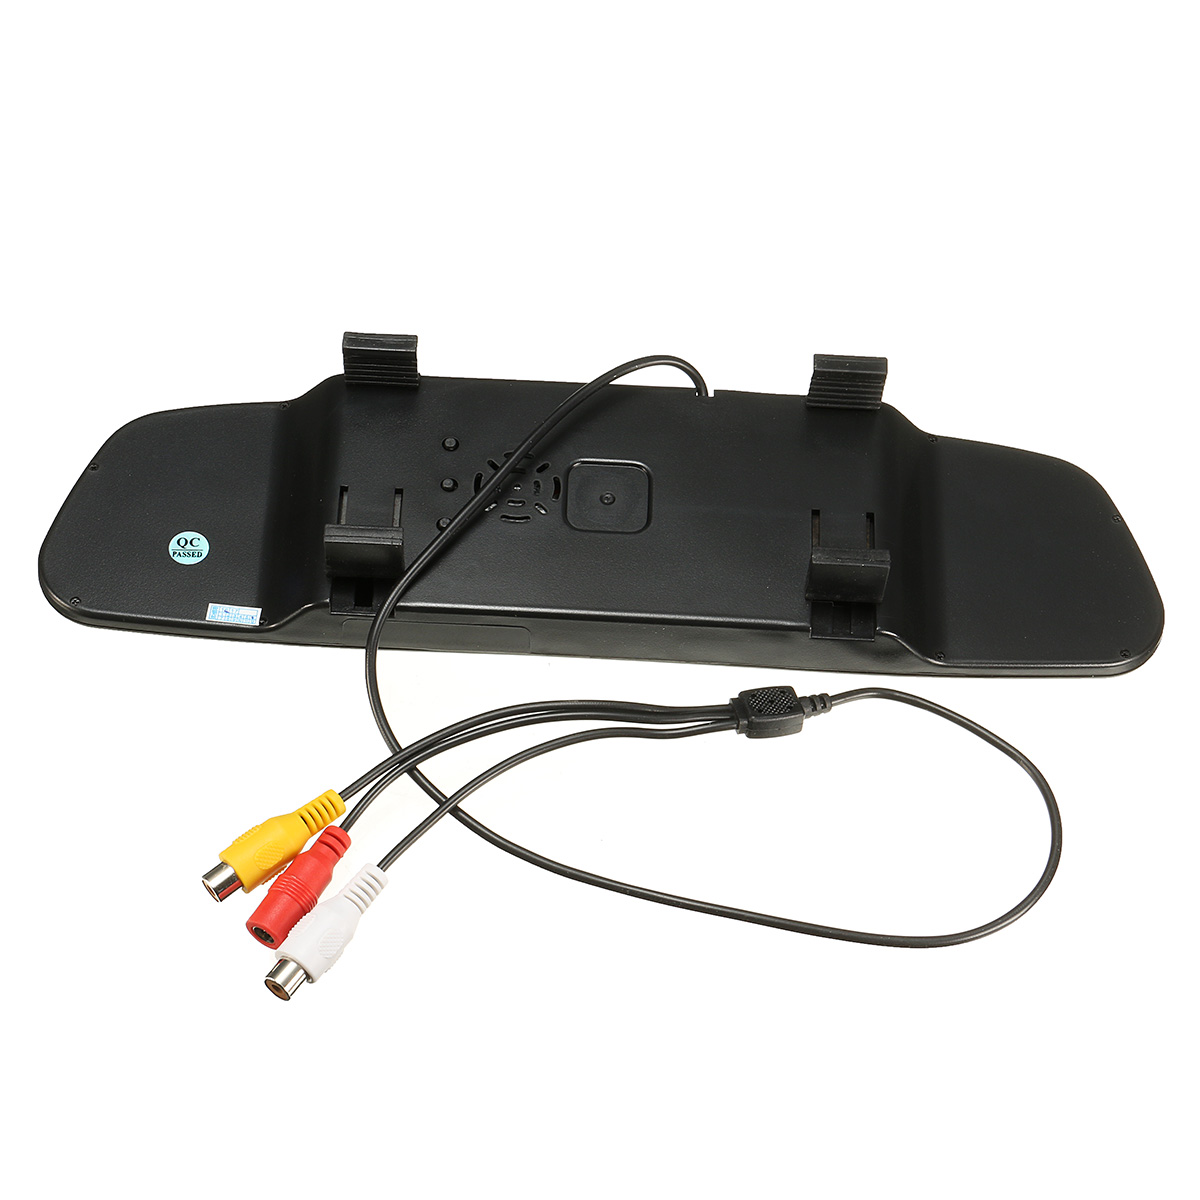 43-Inch-TFT-LCD-Color-Monitor-CCD-Reverse-HD-Digital-Car-Rear-View-Camera-For-Vauxhall-Zafira-1353424